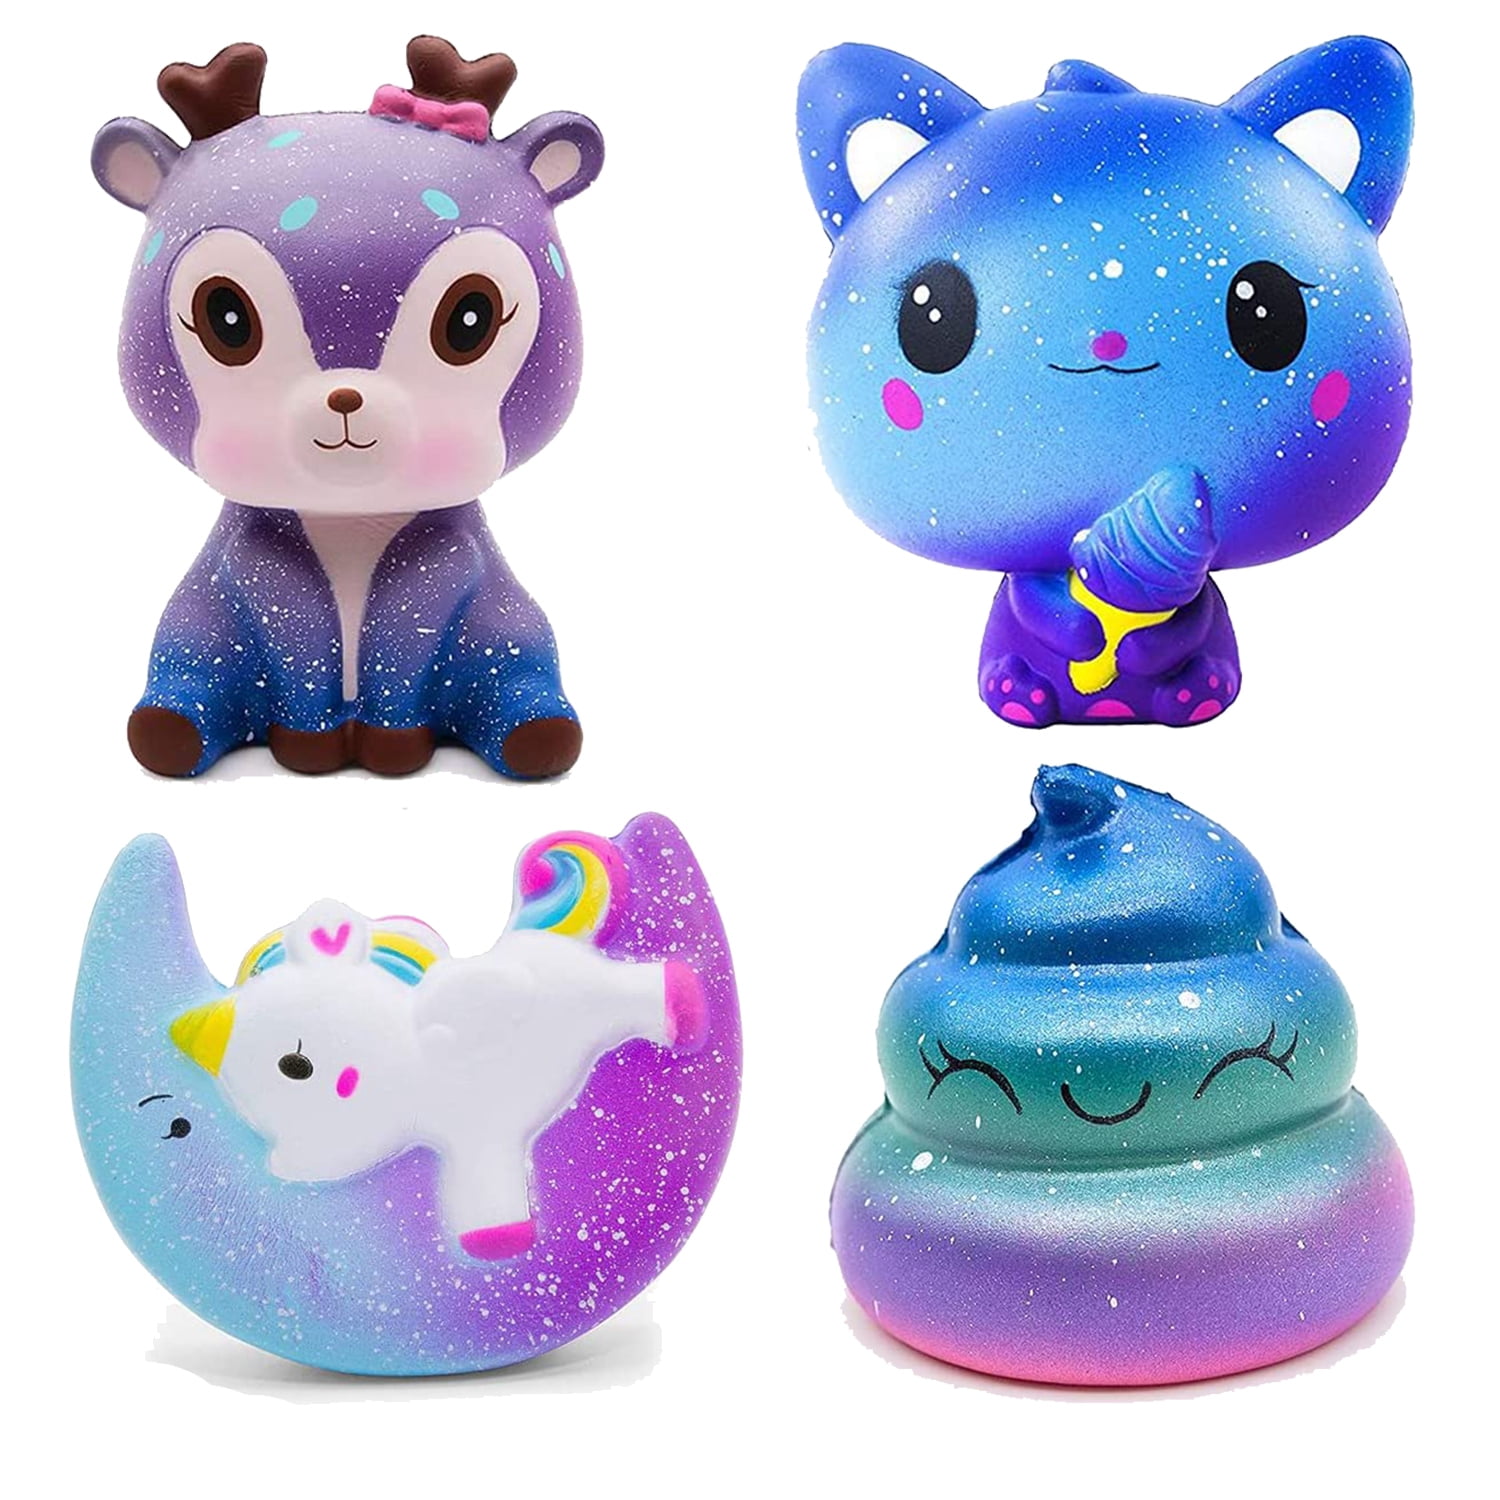 Galaxy Unicorn Squishies Toy Set - Squishy Cat, Galaxy Deer, Unicorn Moon, poop, Kawaii Slow Rising Toys for Kids Adults Stress Relief Toy (4 Packs) - Walmart.com